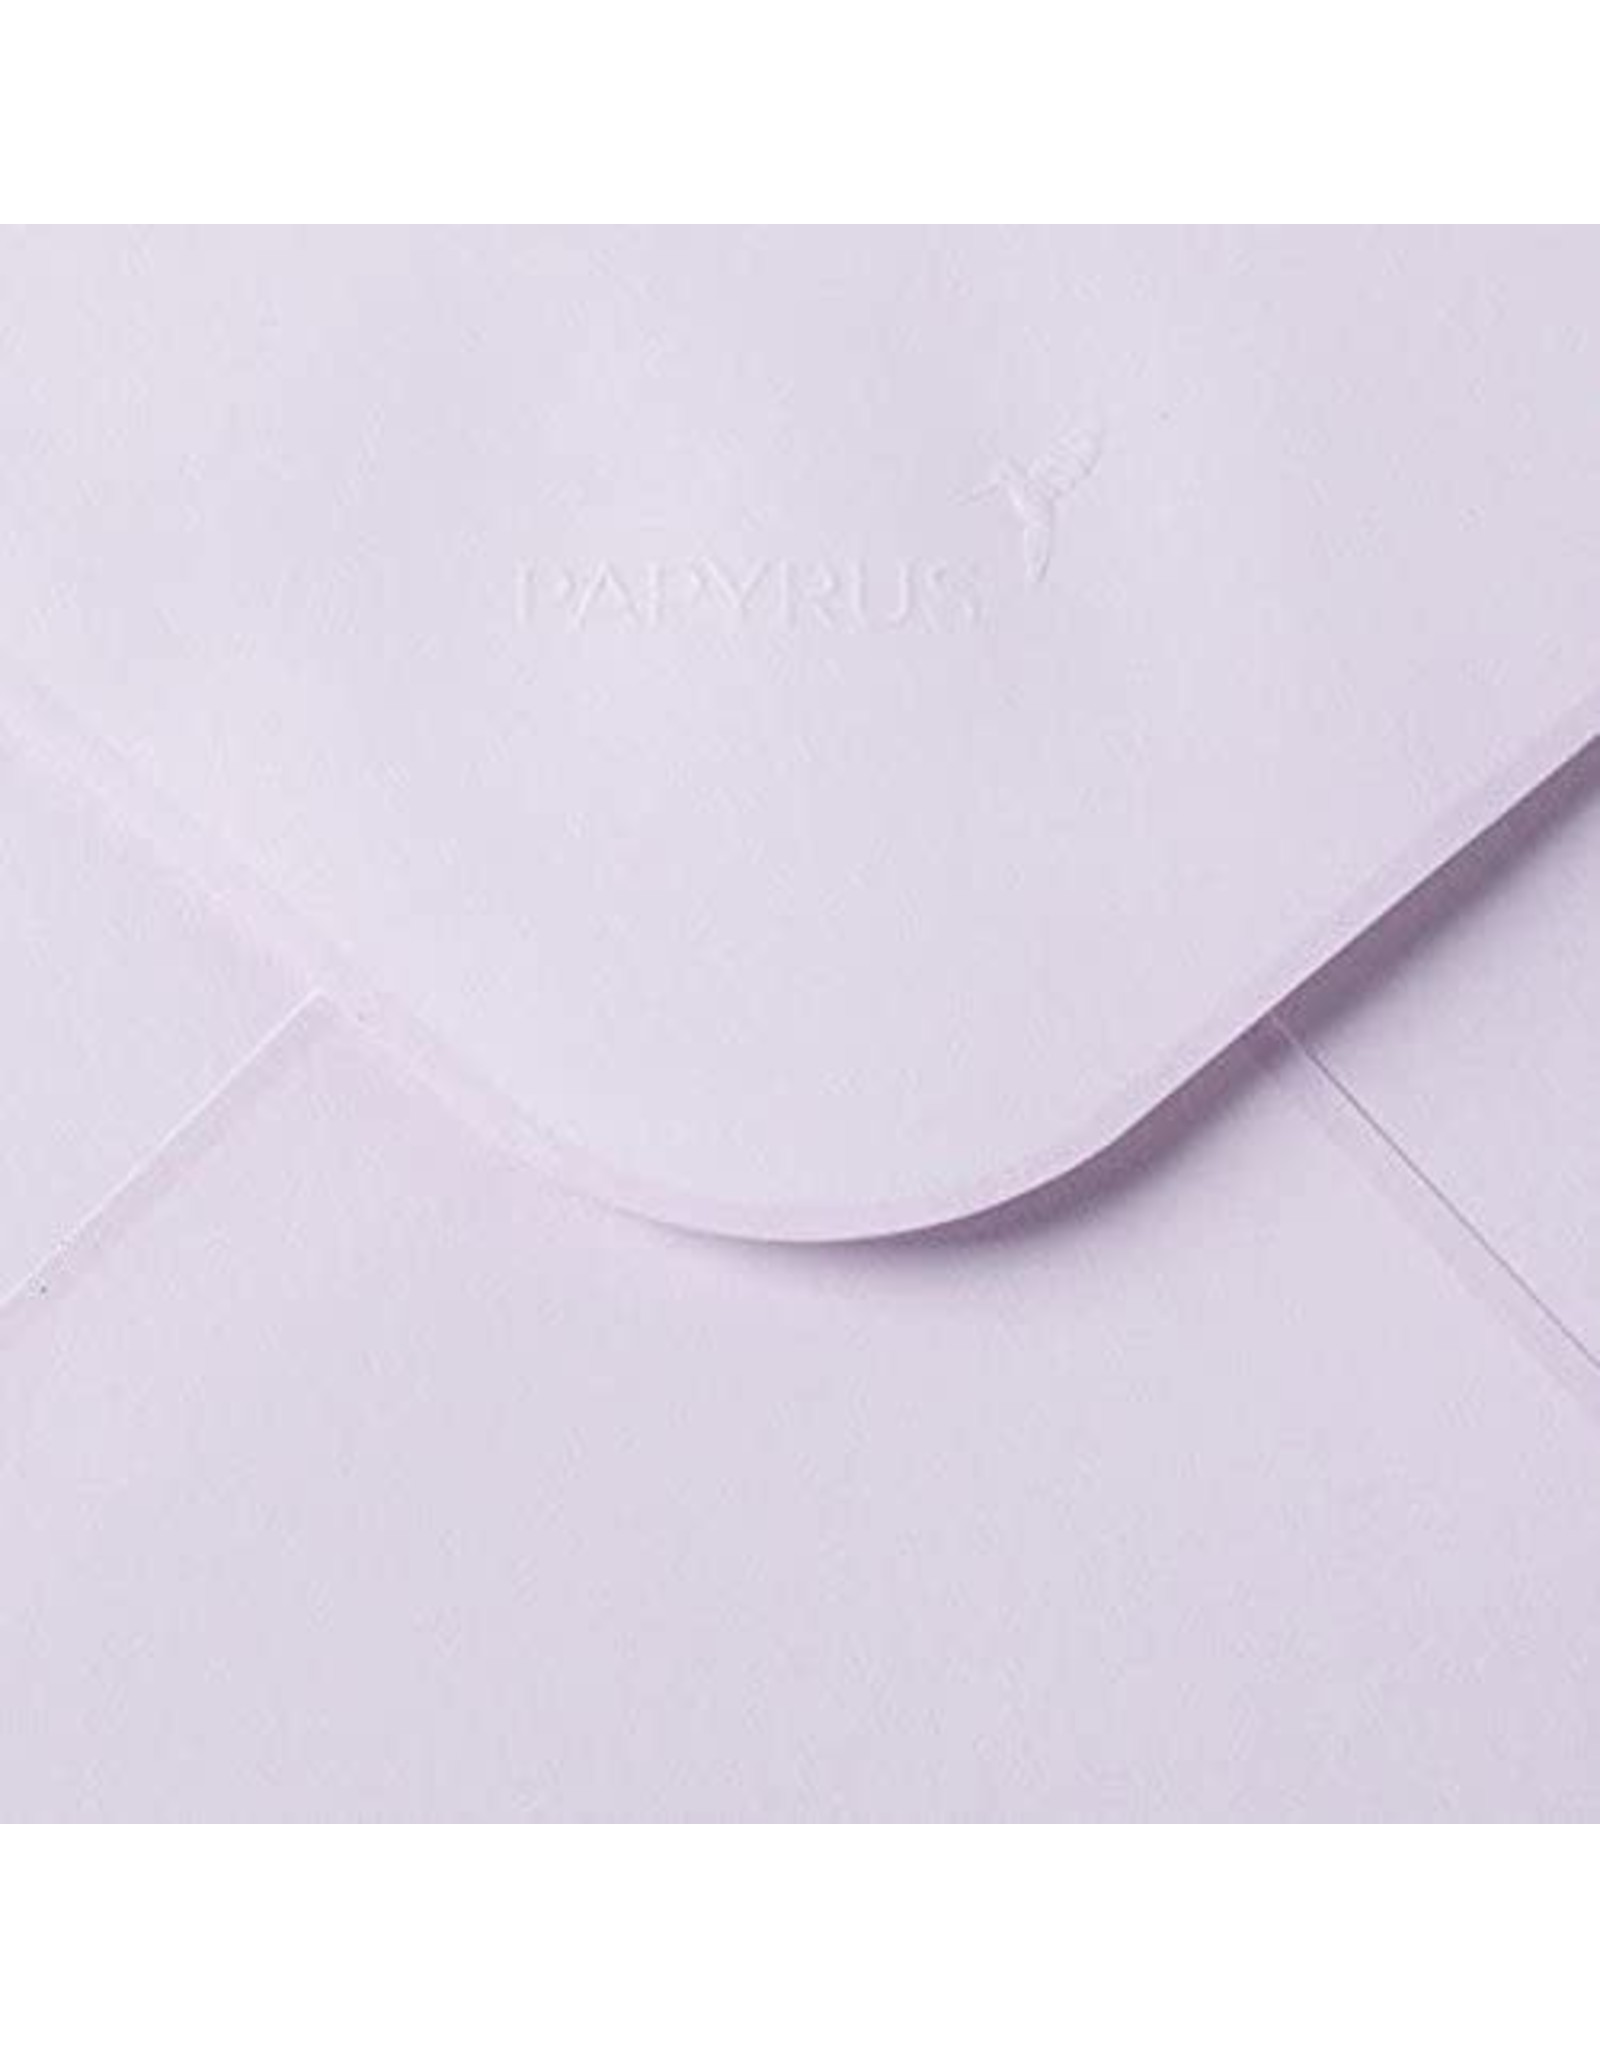 PAPYRUS® Blank Card Gemmed Unicorn by Judith Leiber